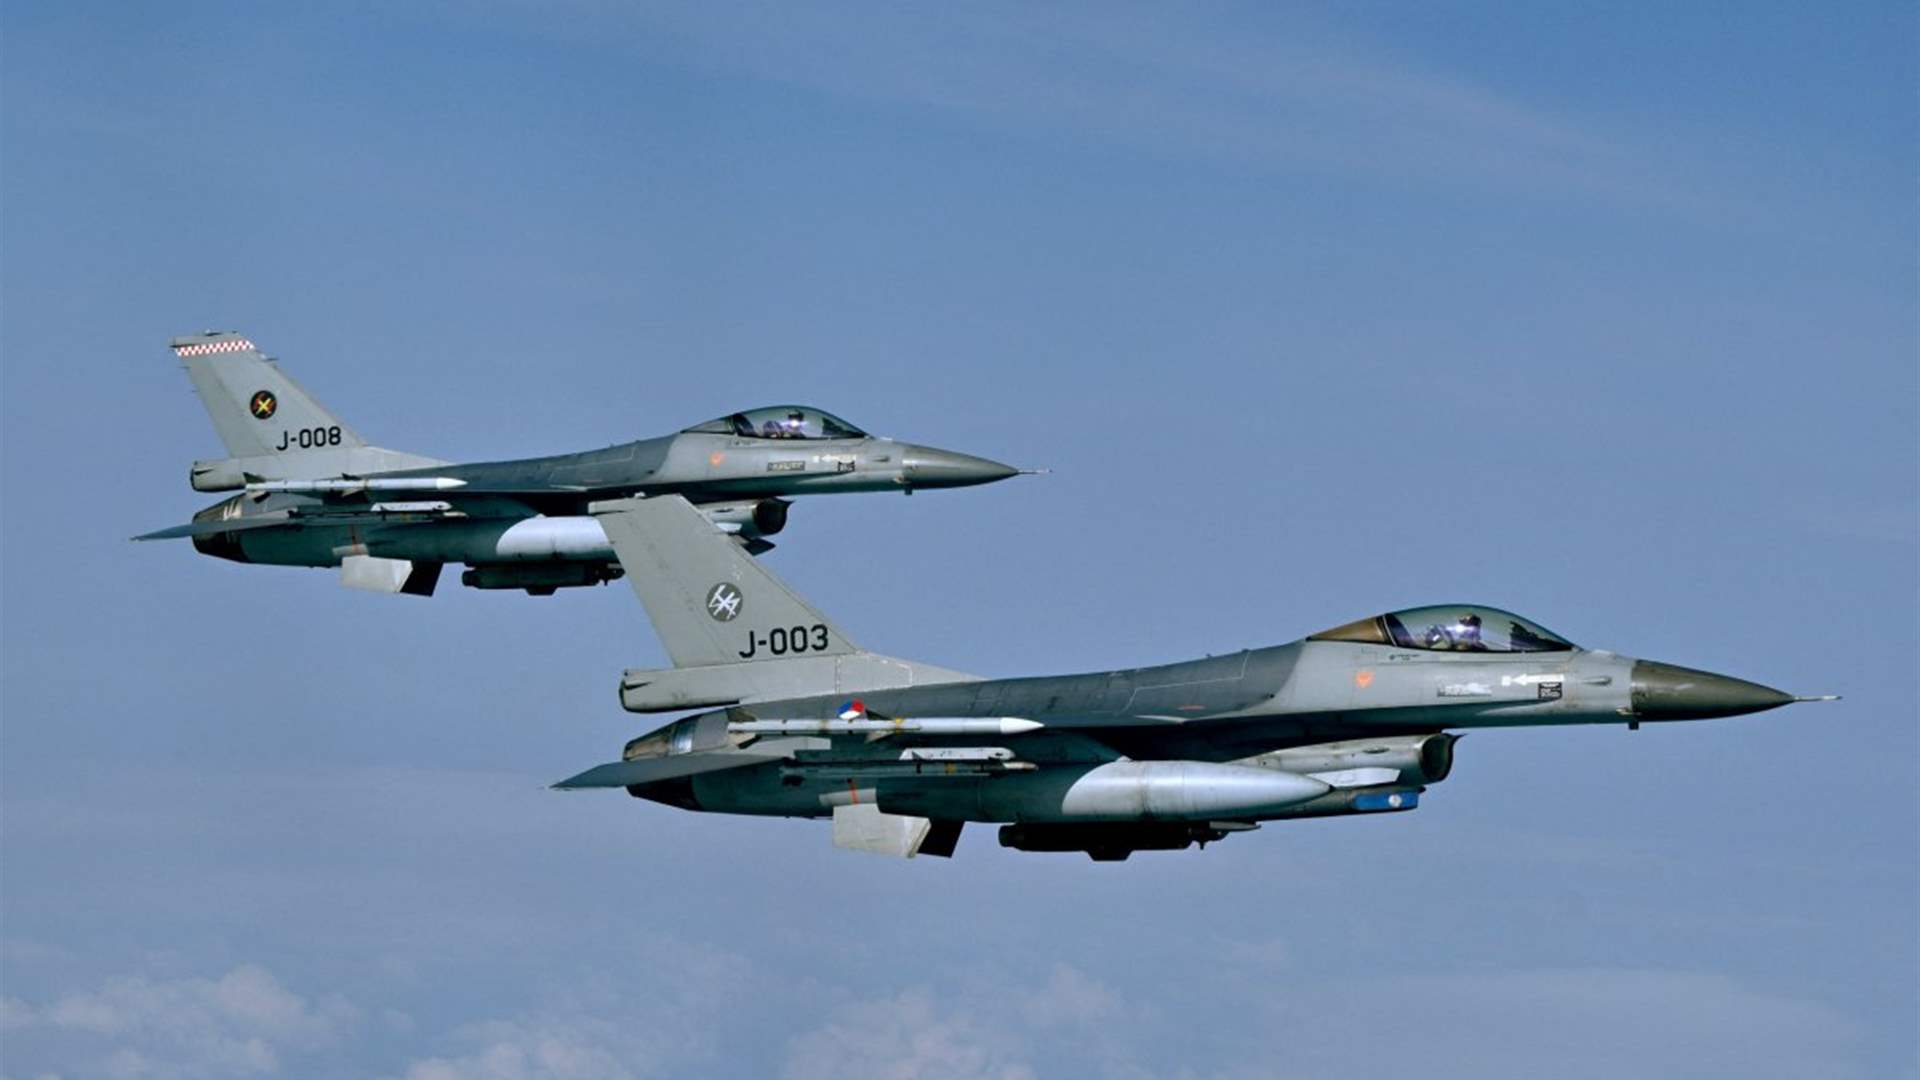 NATO allies have begun transfer of F-16 jets to Ukraine: Blinken